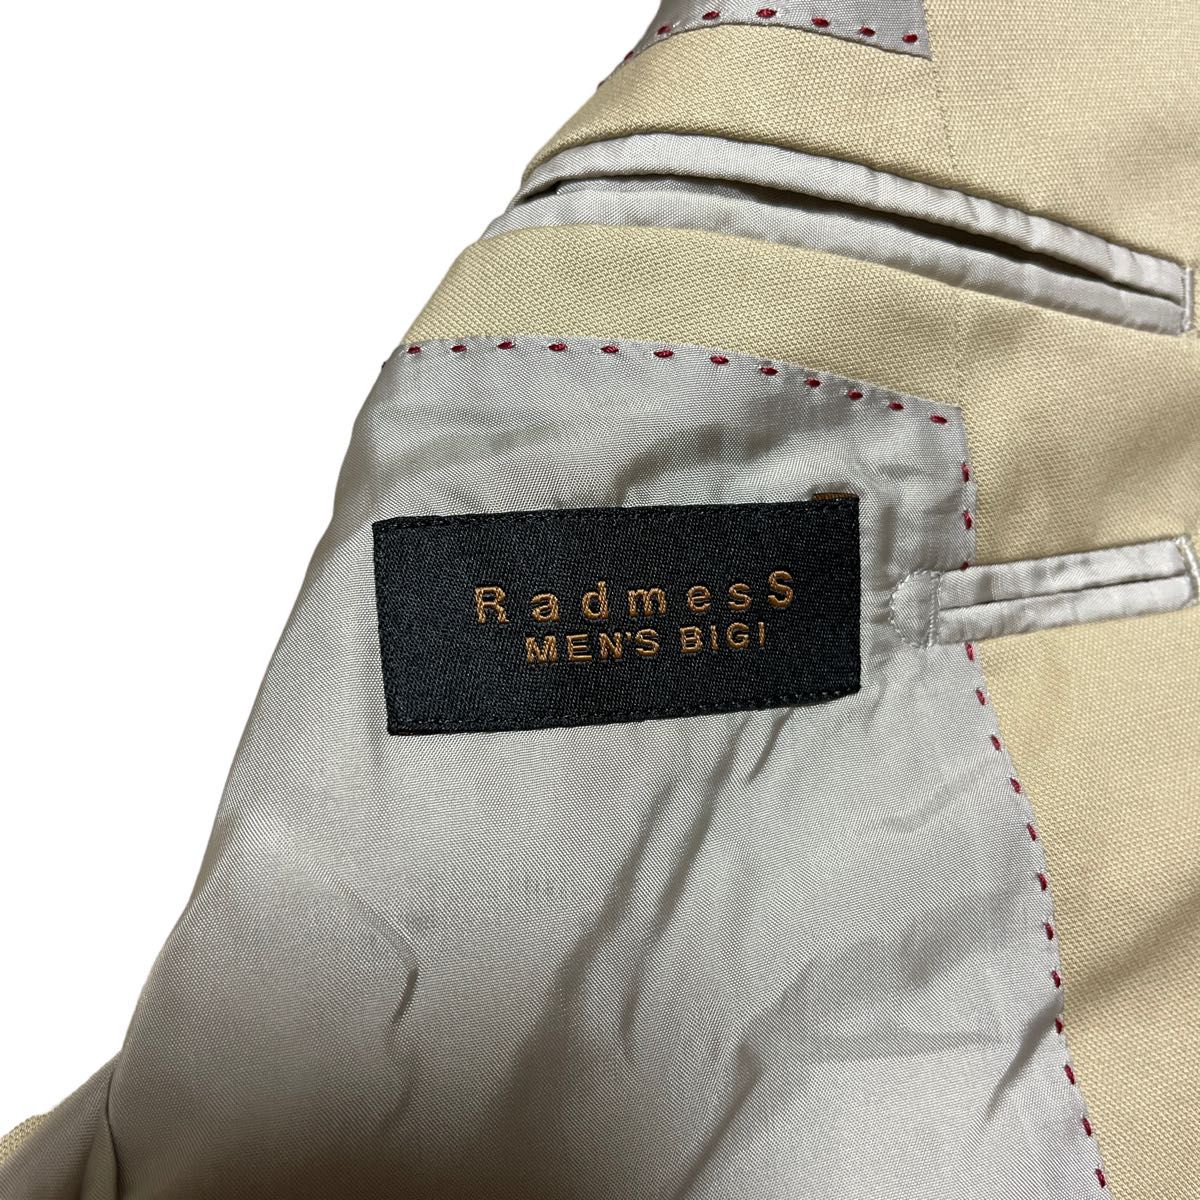 『RADMESS MEN'S BIGI』メンズ ビギ テーラードジャケットM ビジネス オフィスワーク カジュアル